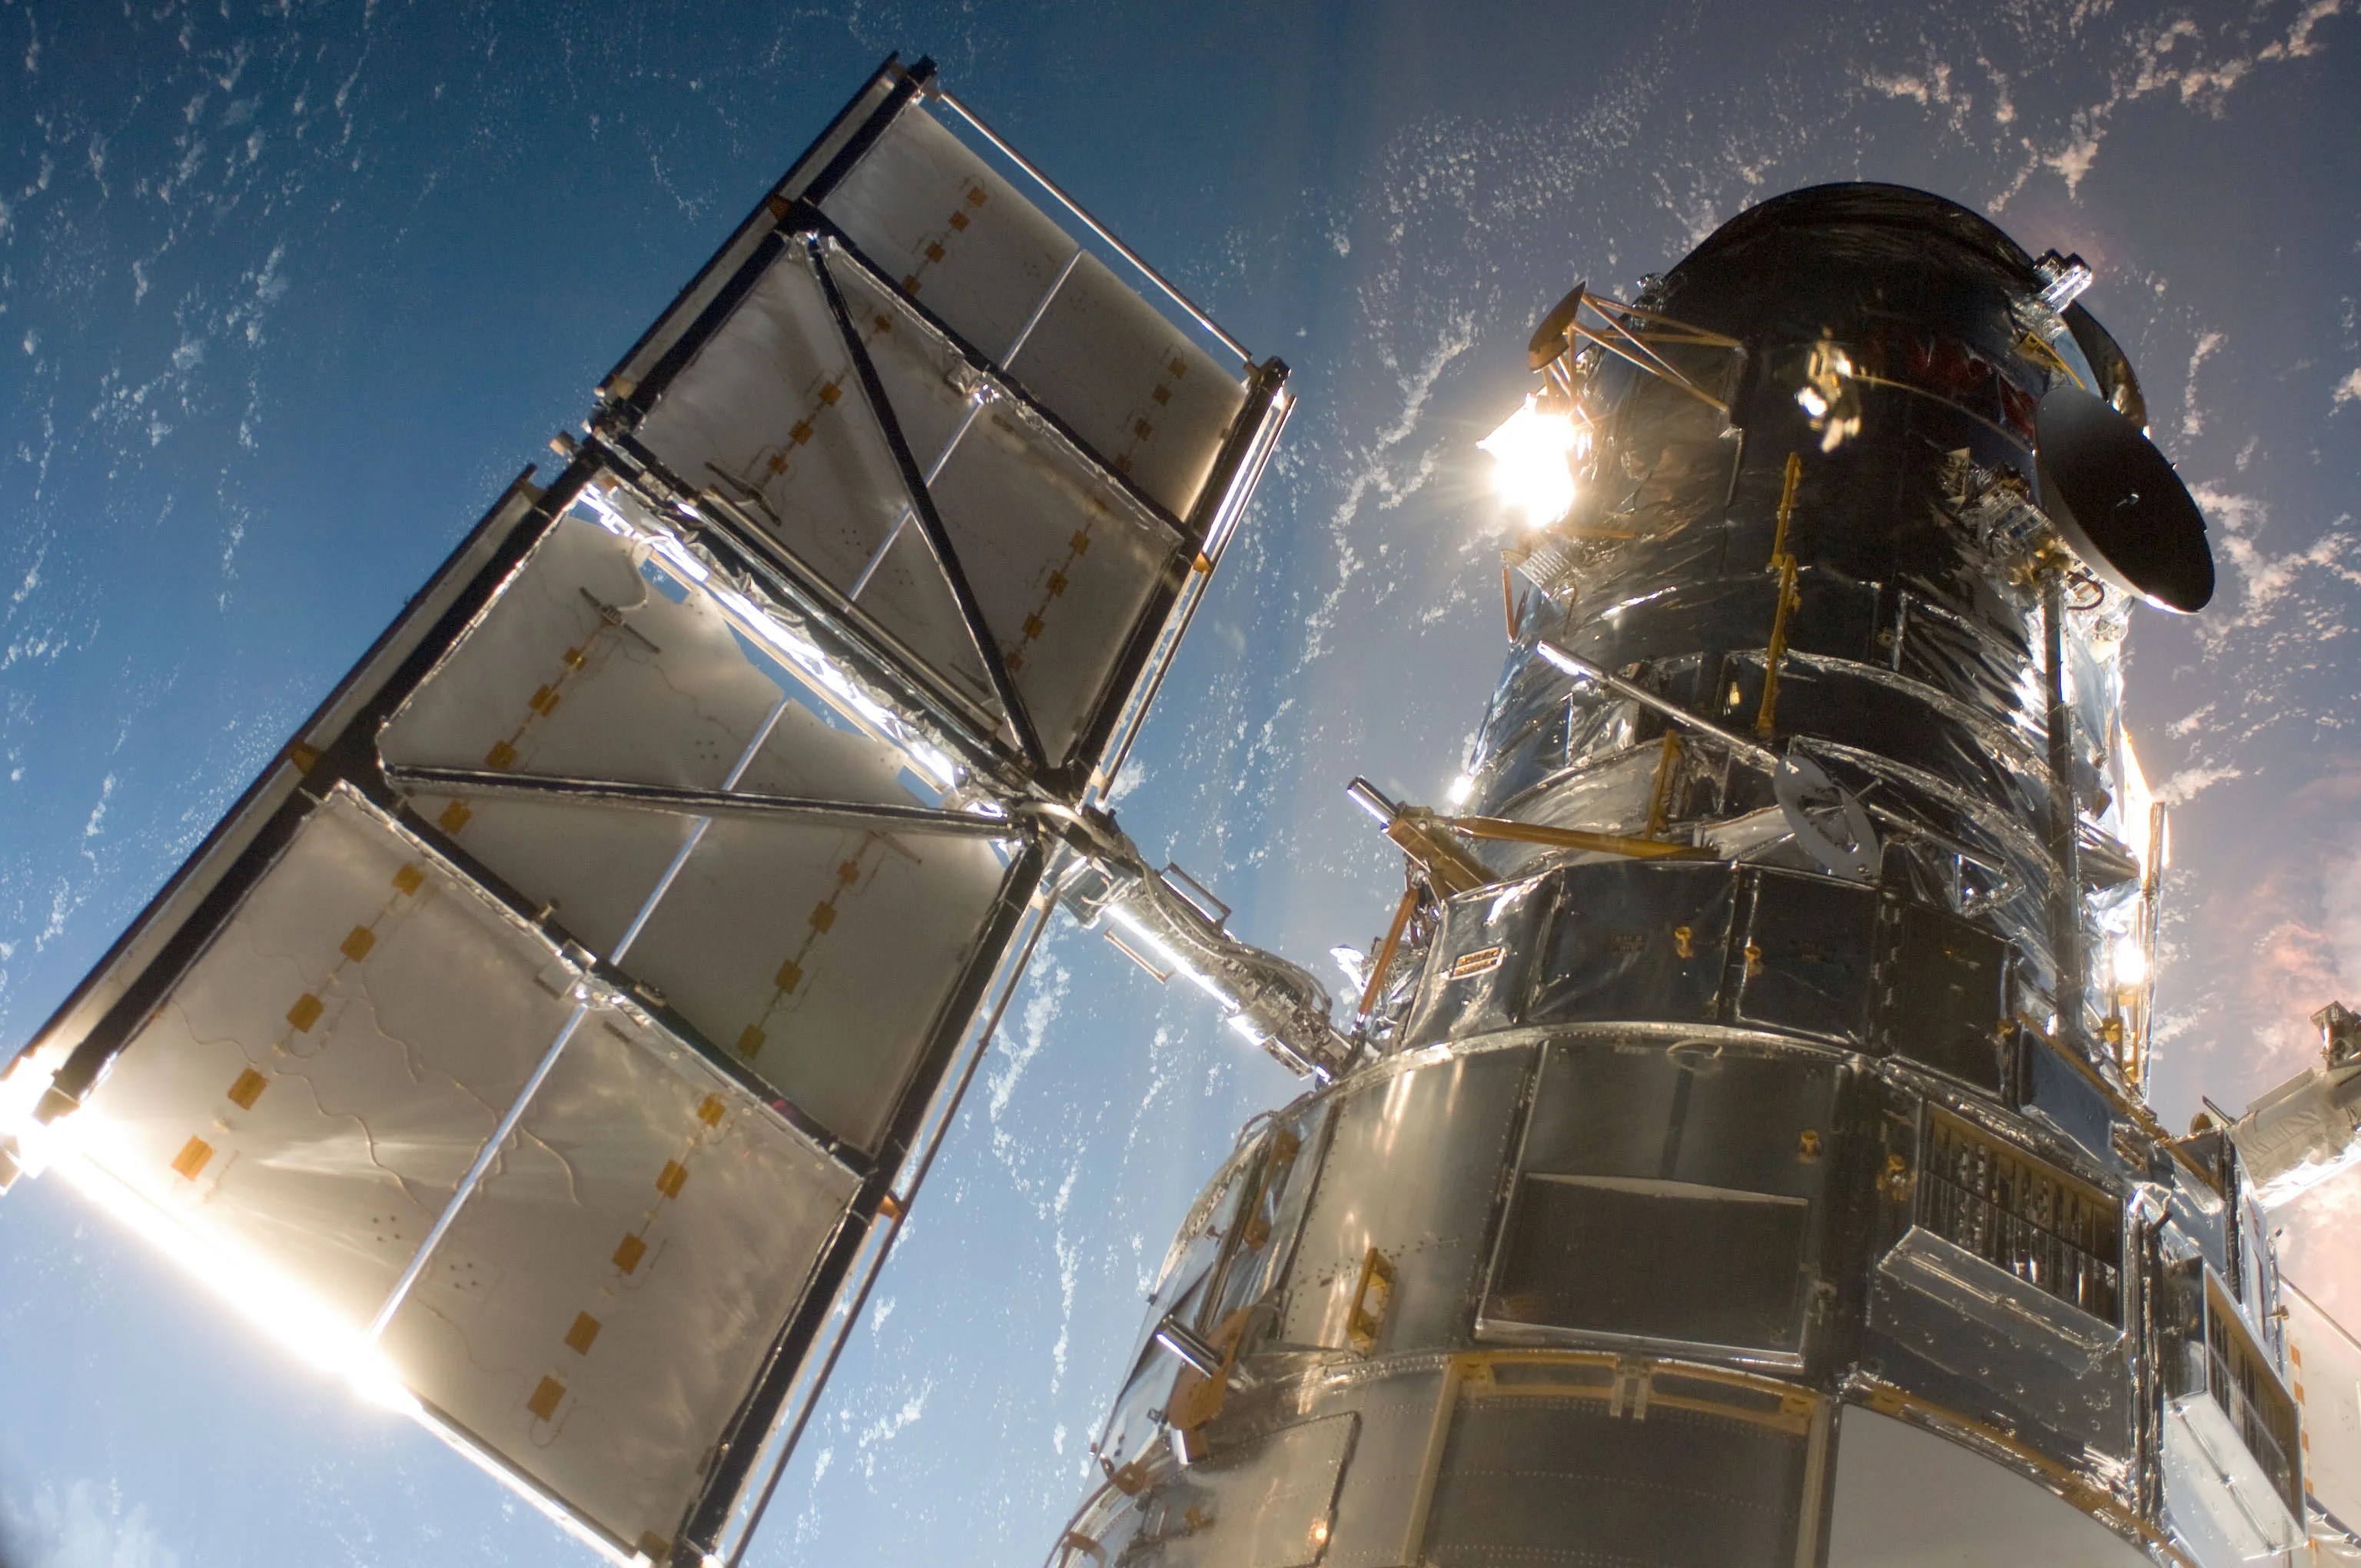 Hubble's Servicing Mission 4